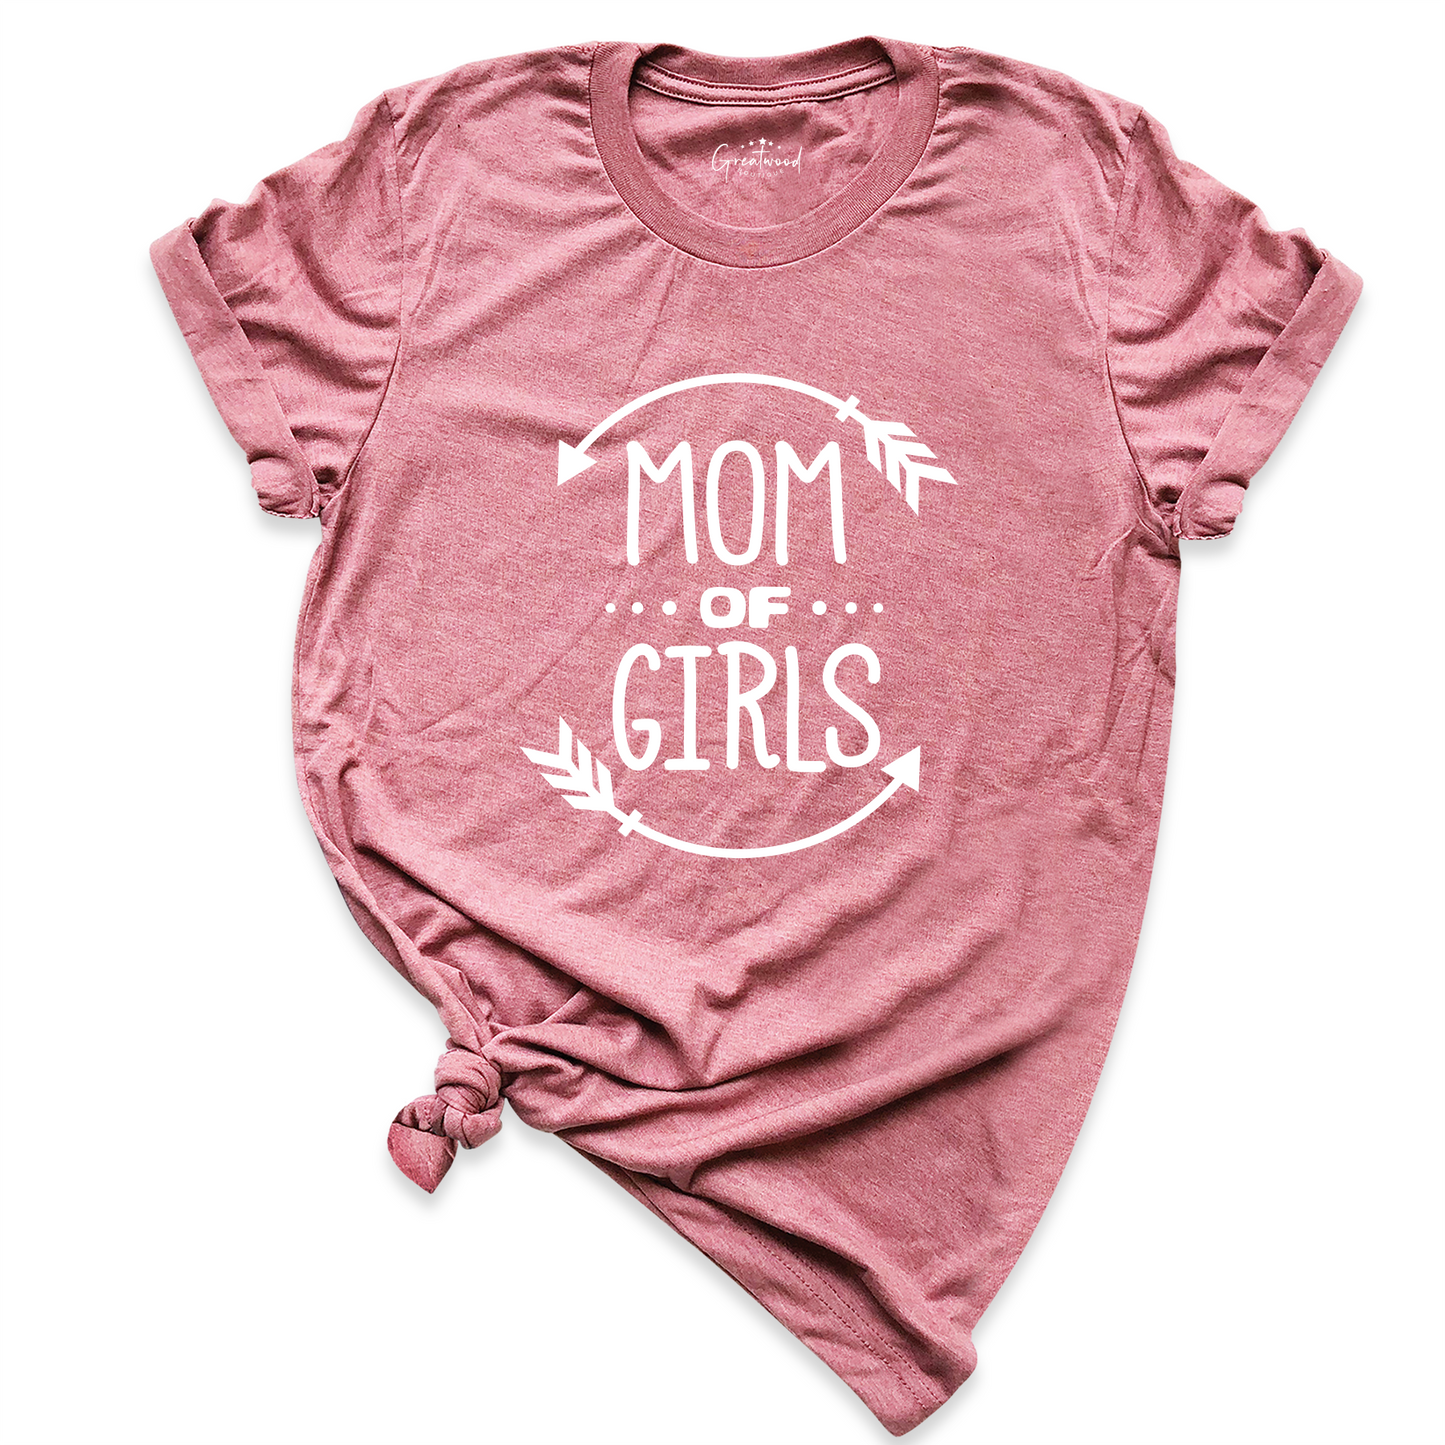 Mom of Girls Shirt